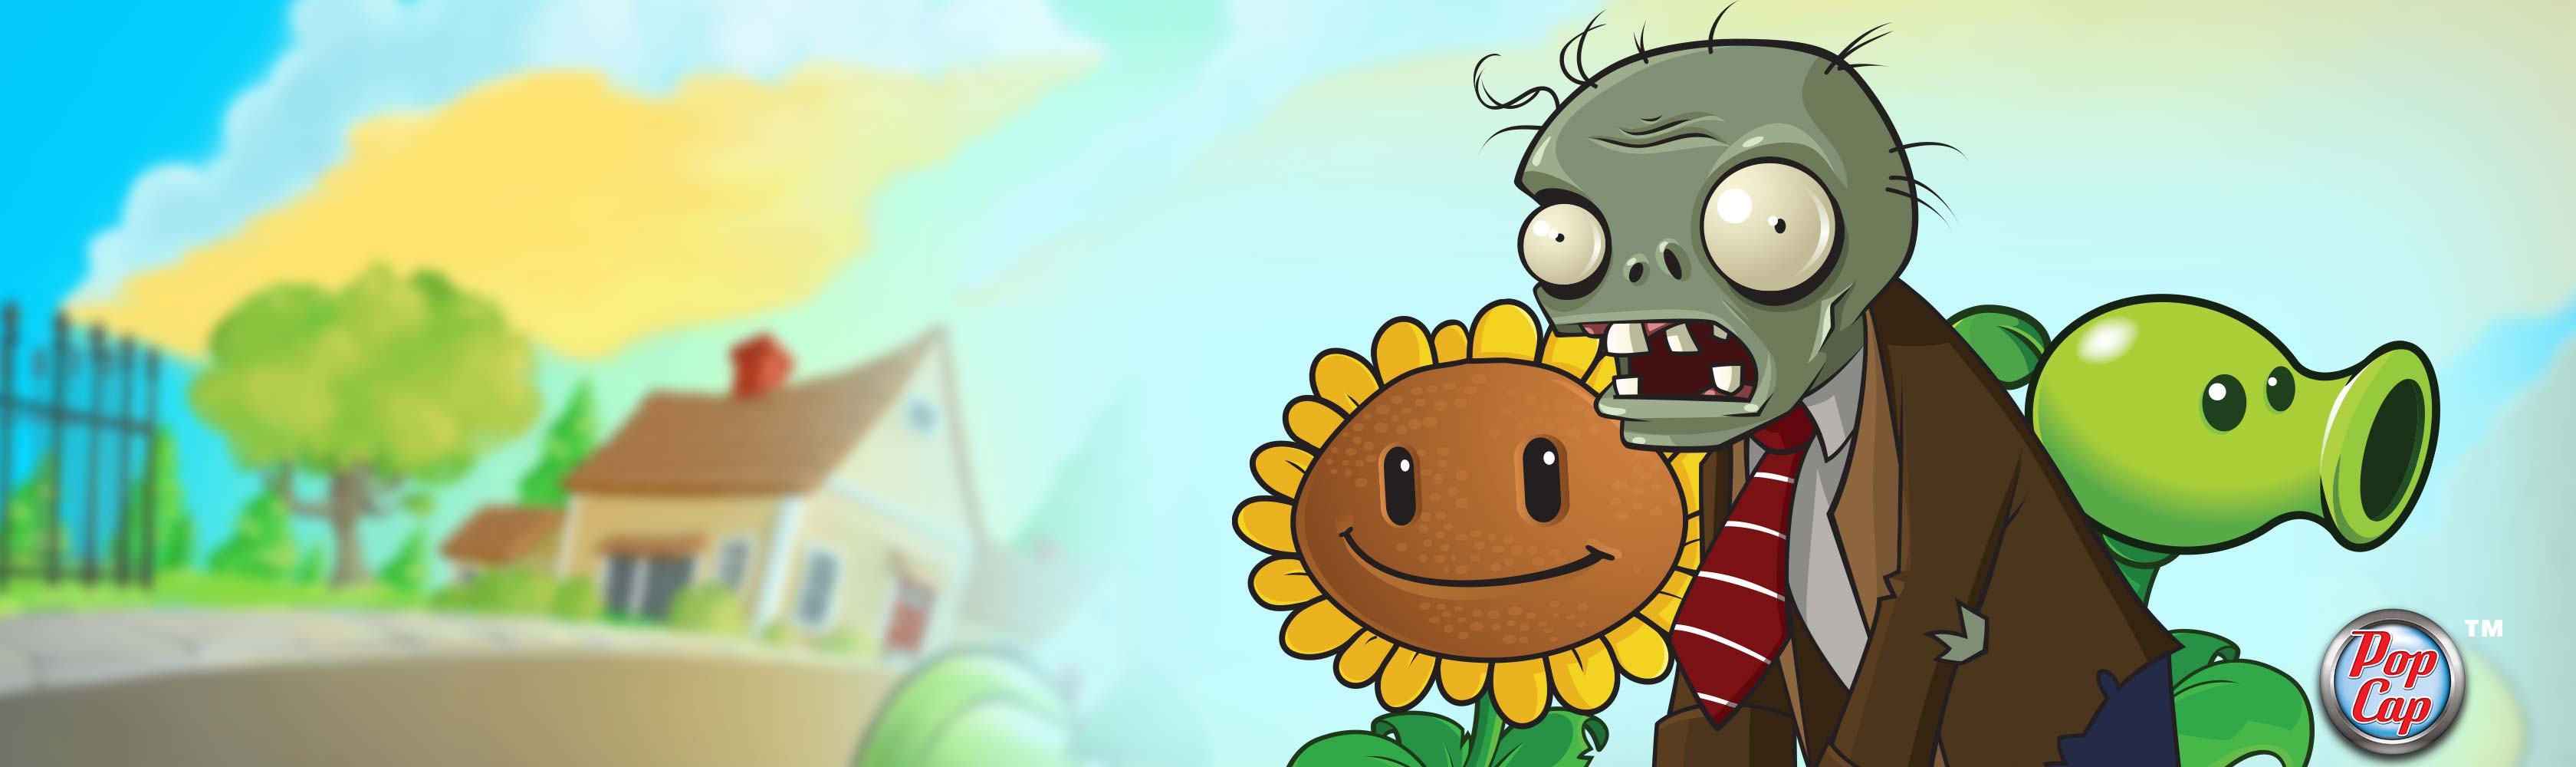 plants vs zombies online free